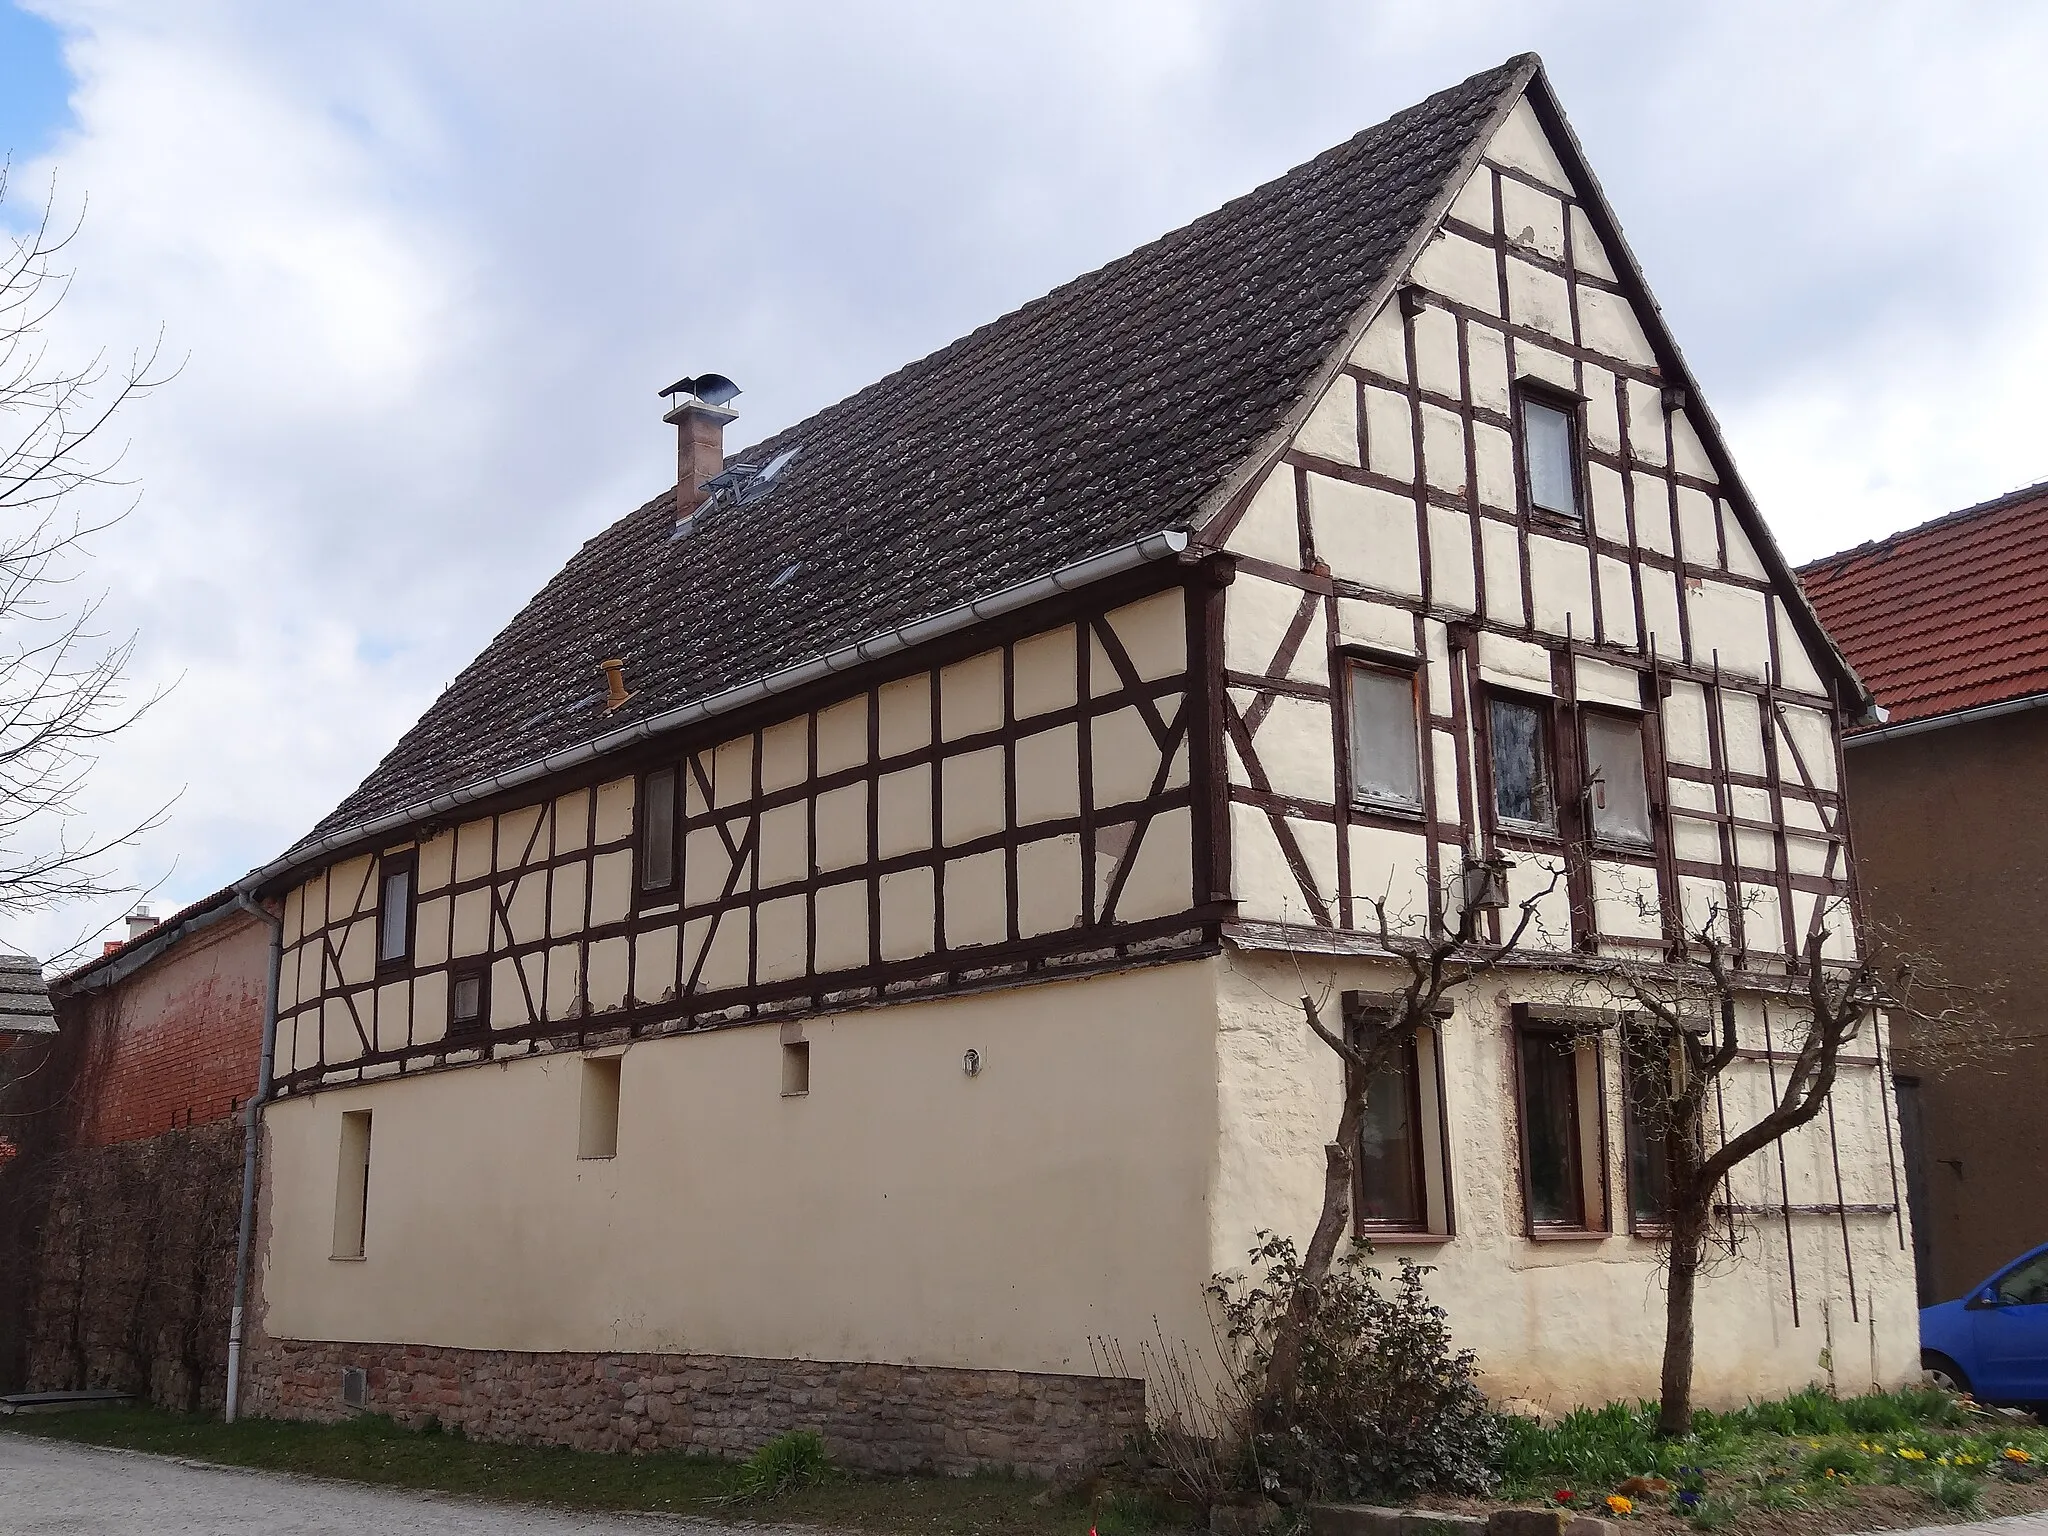 Photo showing: House in Hauteroda, Thuringia, Germany